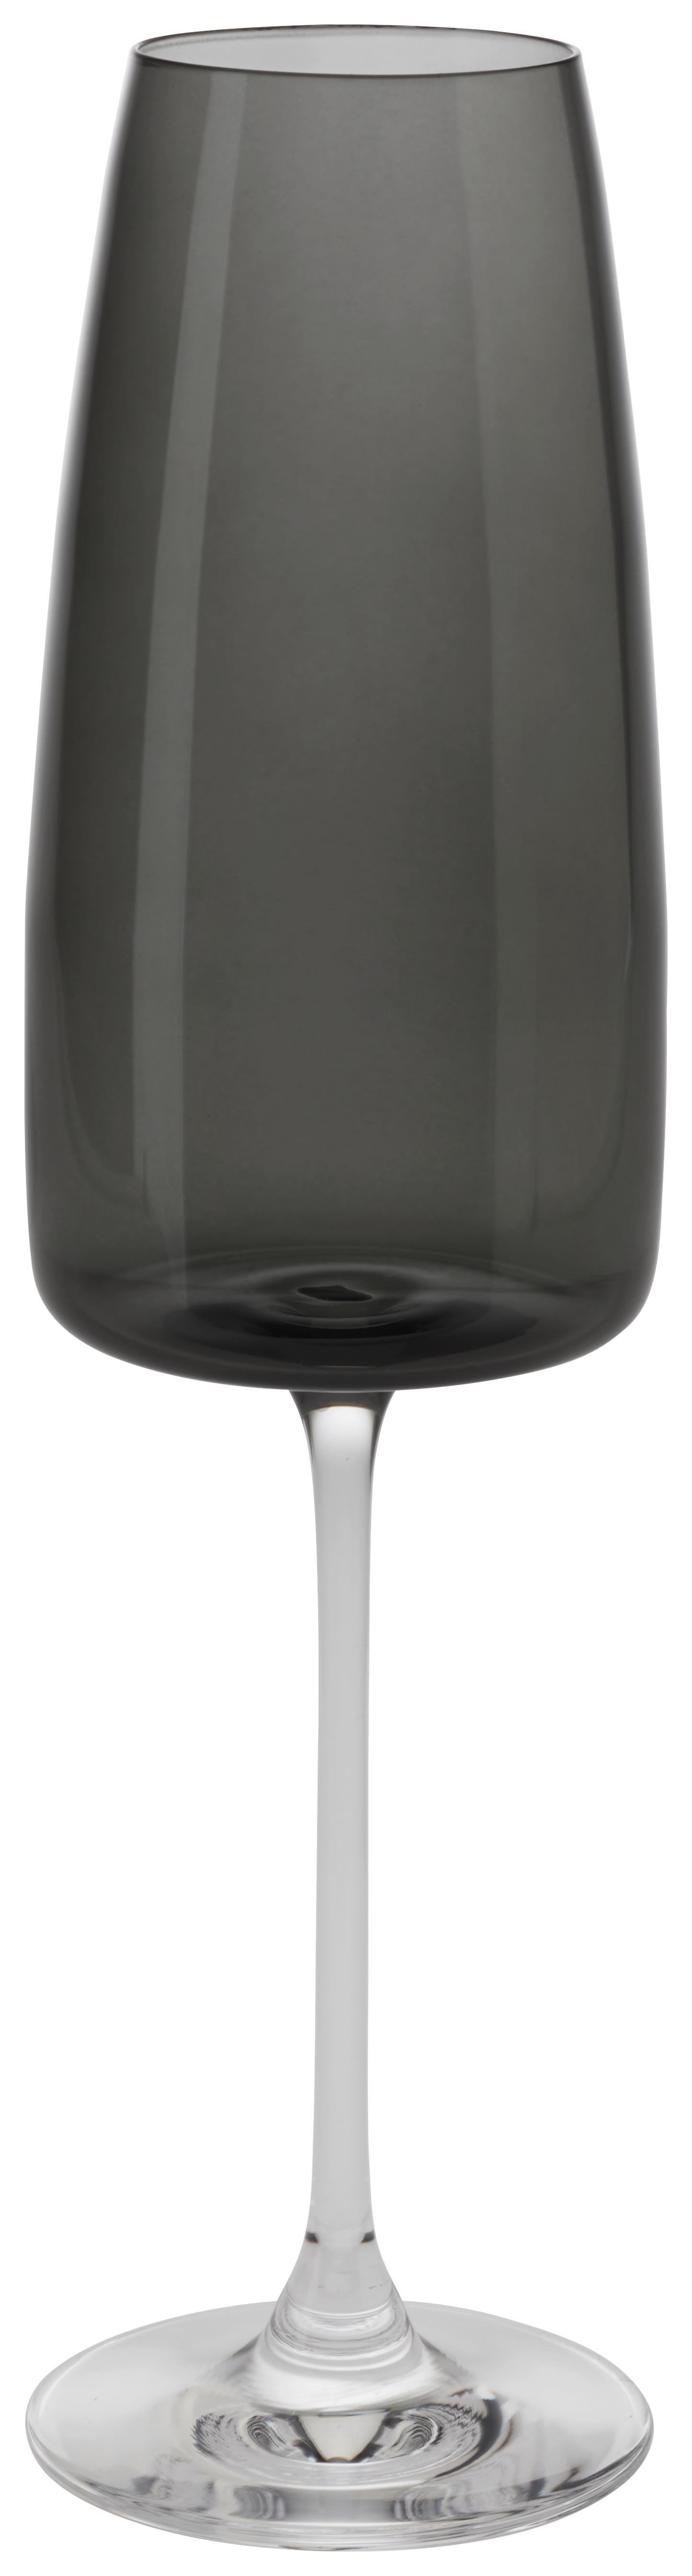 Sklenice Na Sekt Nicki, 340ml - černá, Moderní, sklo (6,6/25cm) - Premium Living